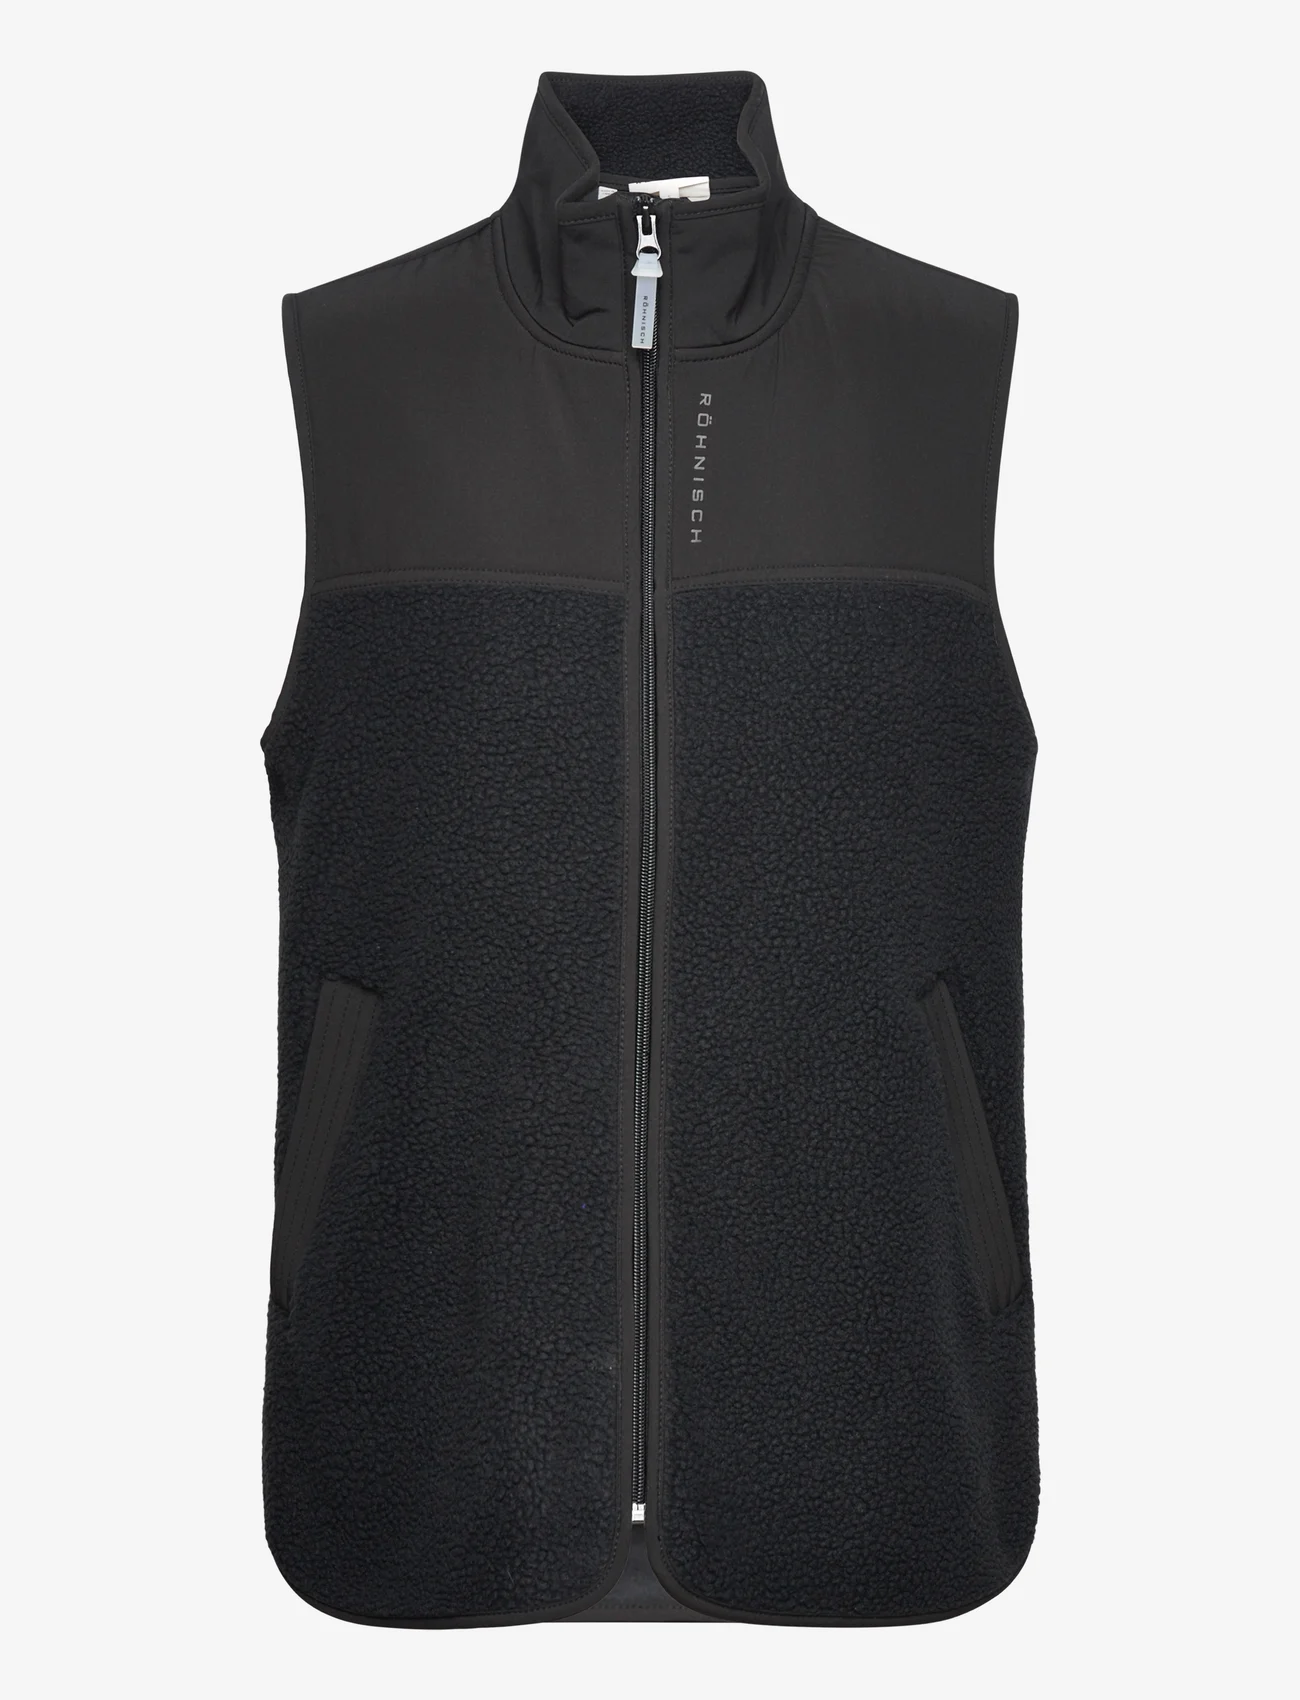 Röhnisch - Phoebe Vest - quilted vests - black - 0